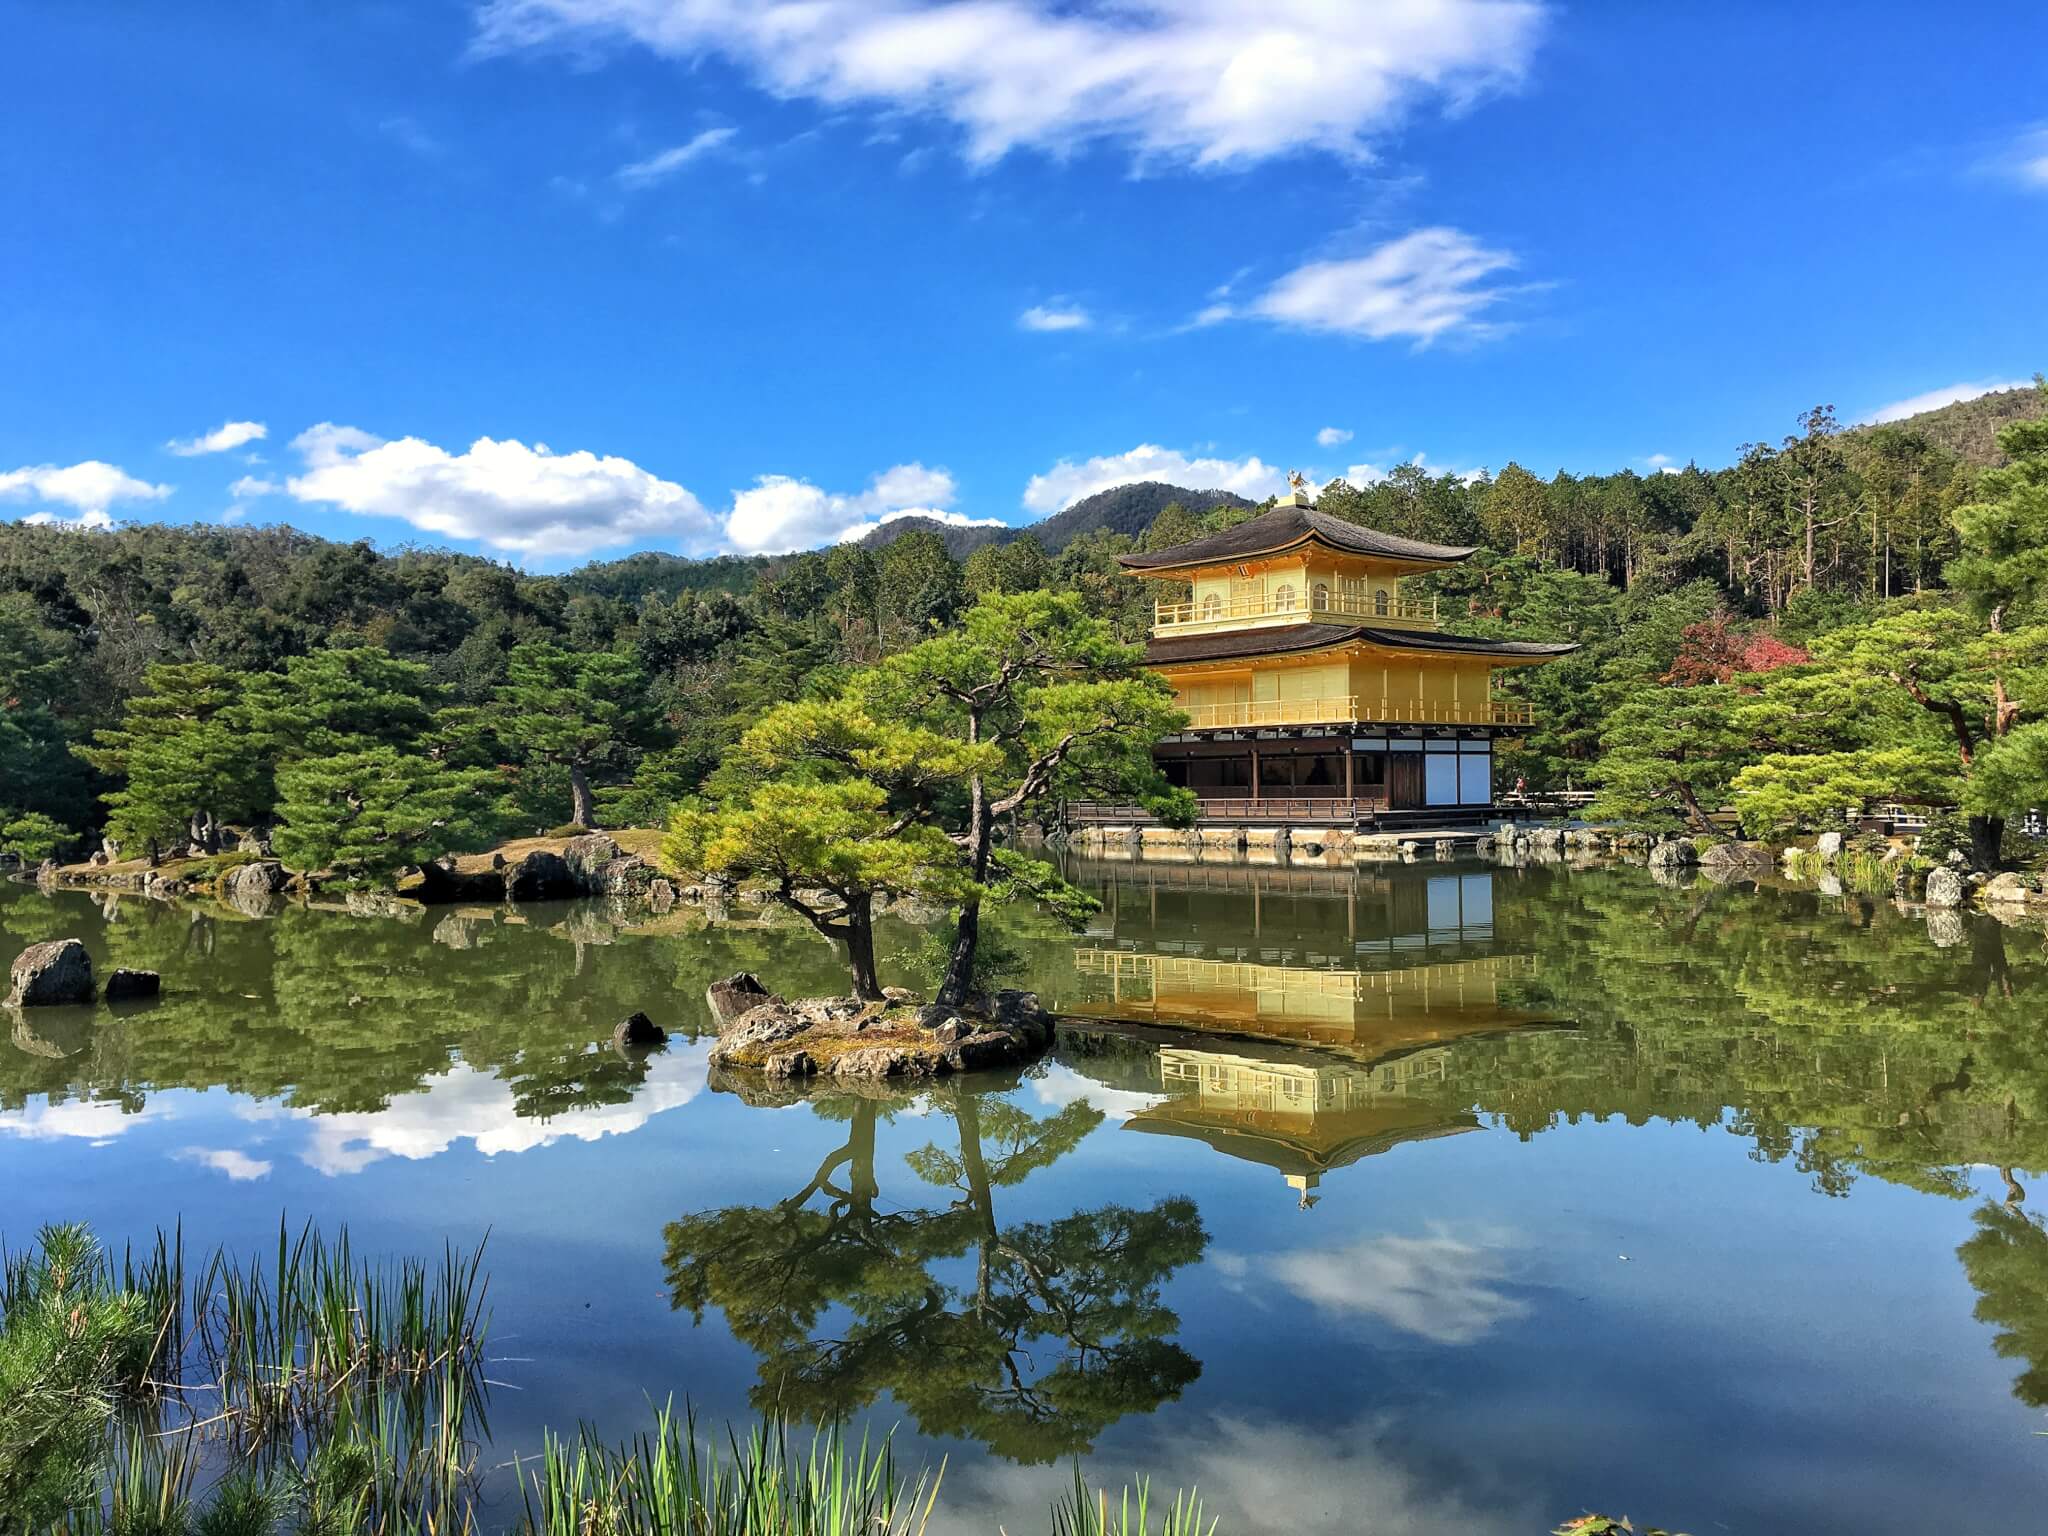 24 hours to explore Kyoto